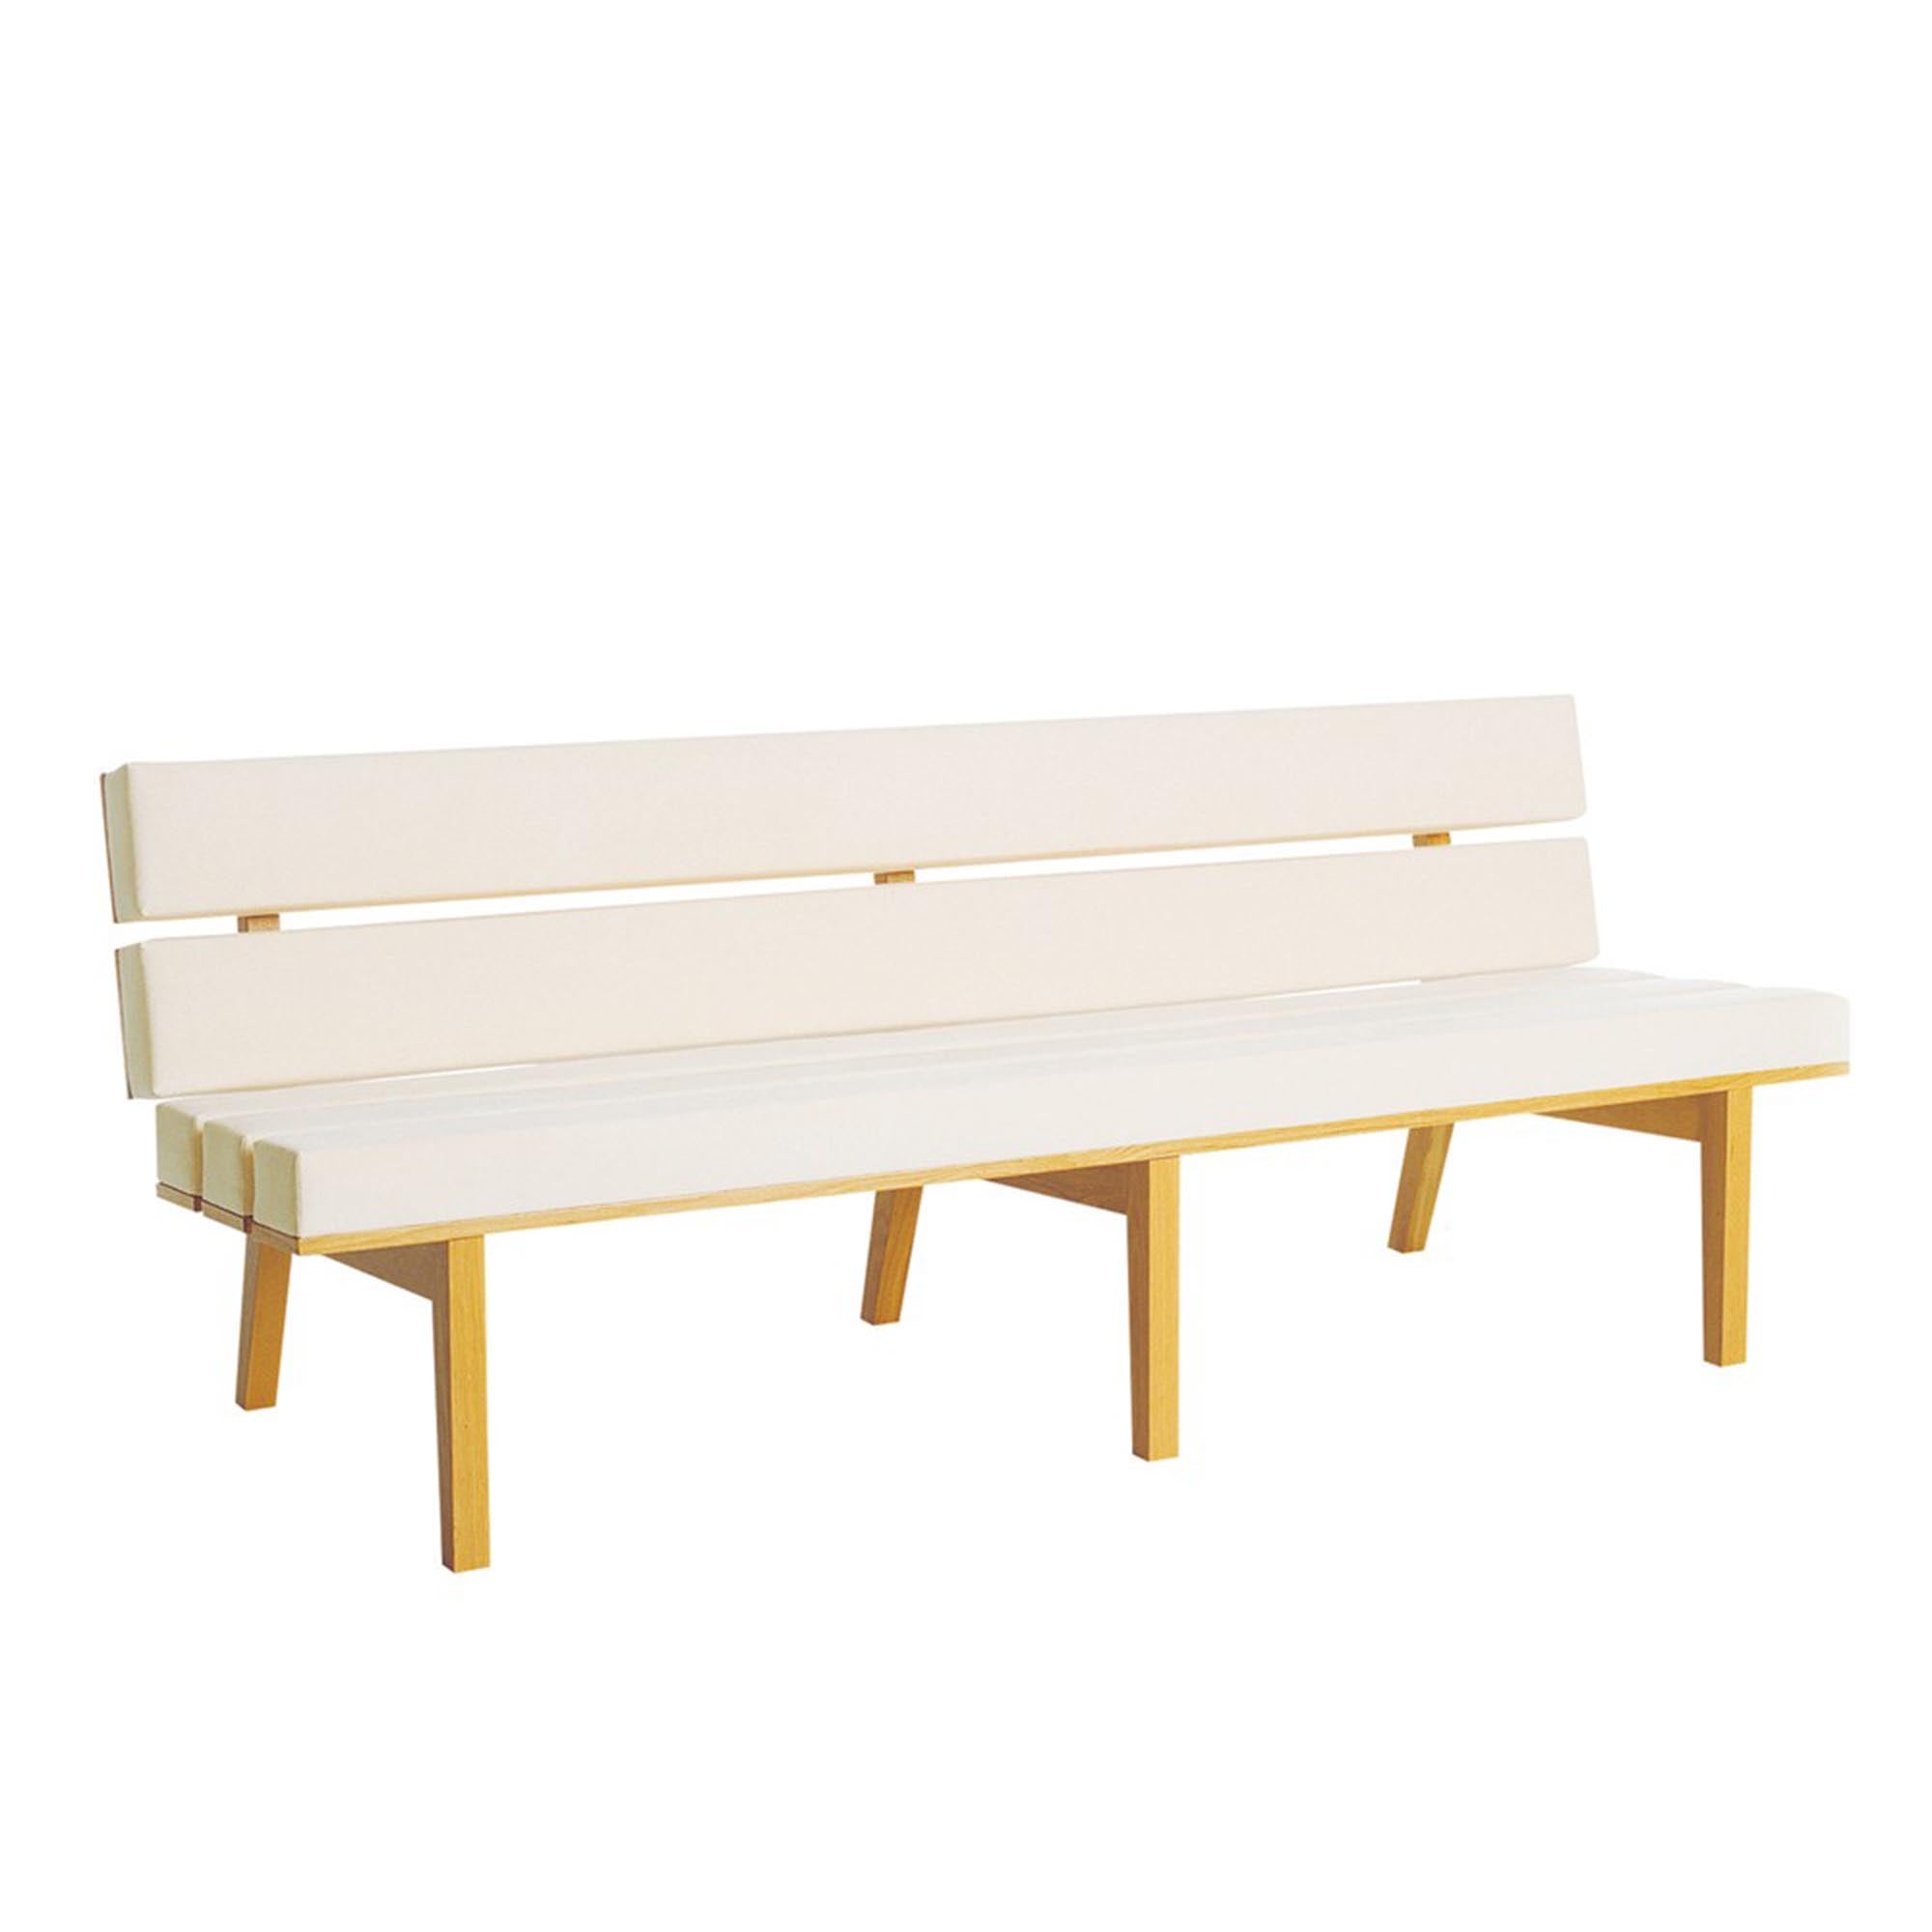 KAMON LOUNGE Bench beige upholstery, natural frame